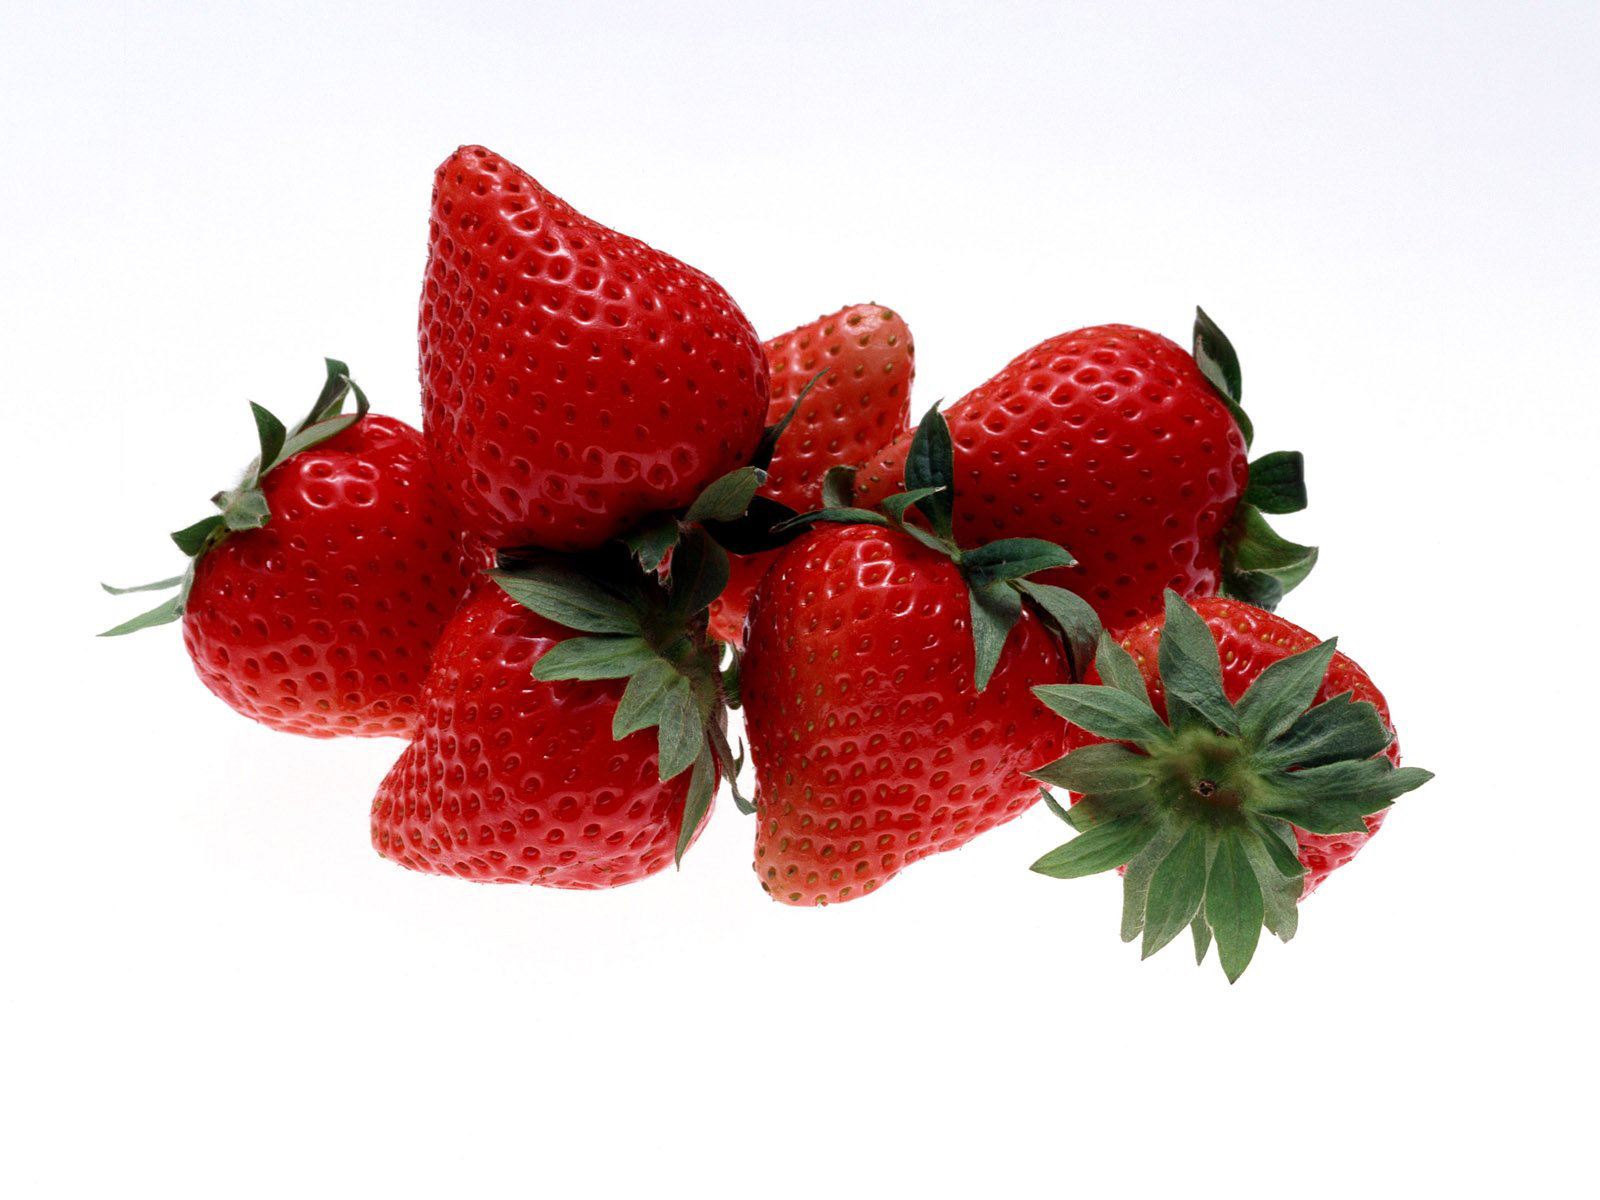 Excellent Desktop Strawberry Fruit Wallpaper Free Download